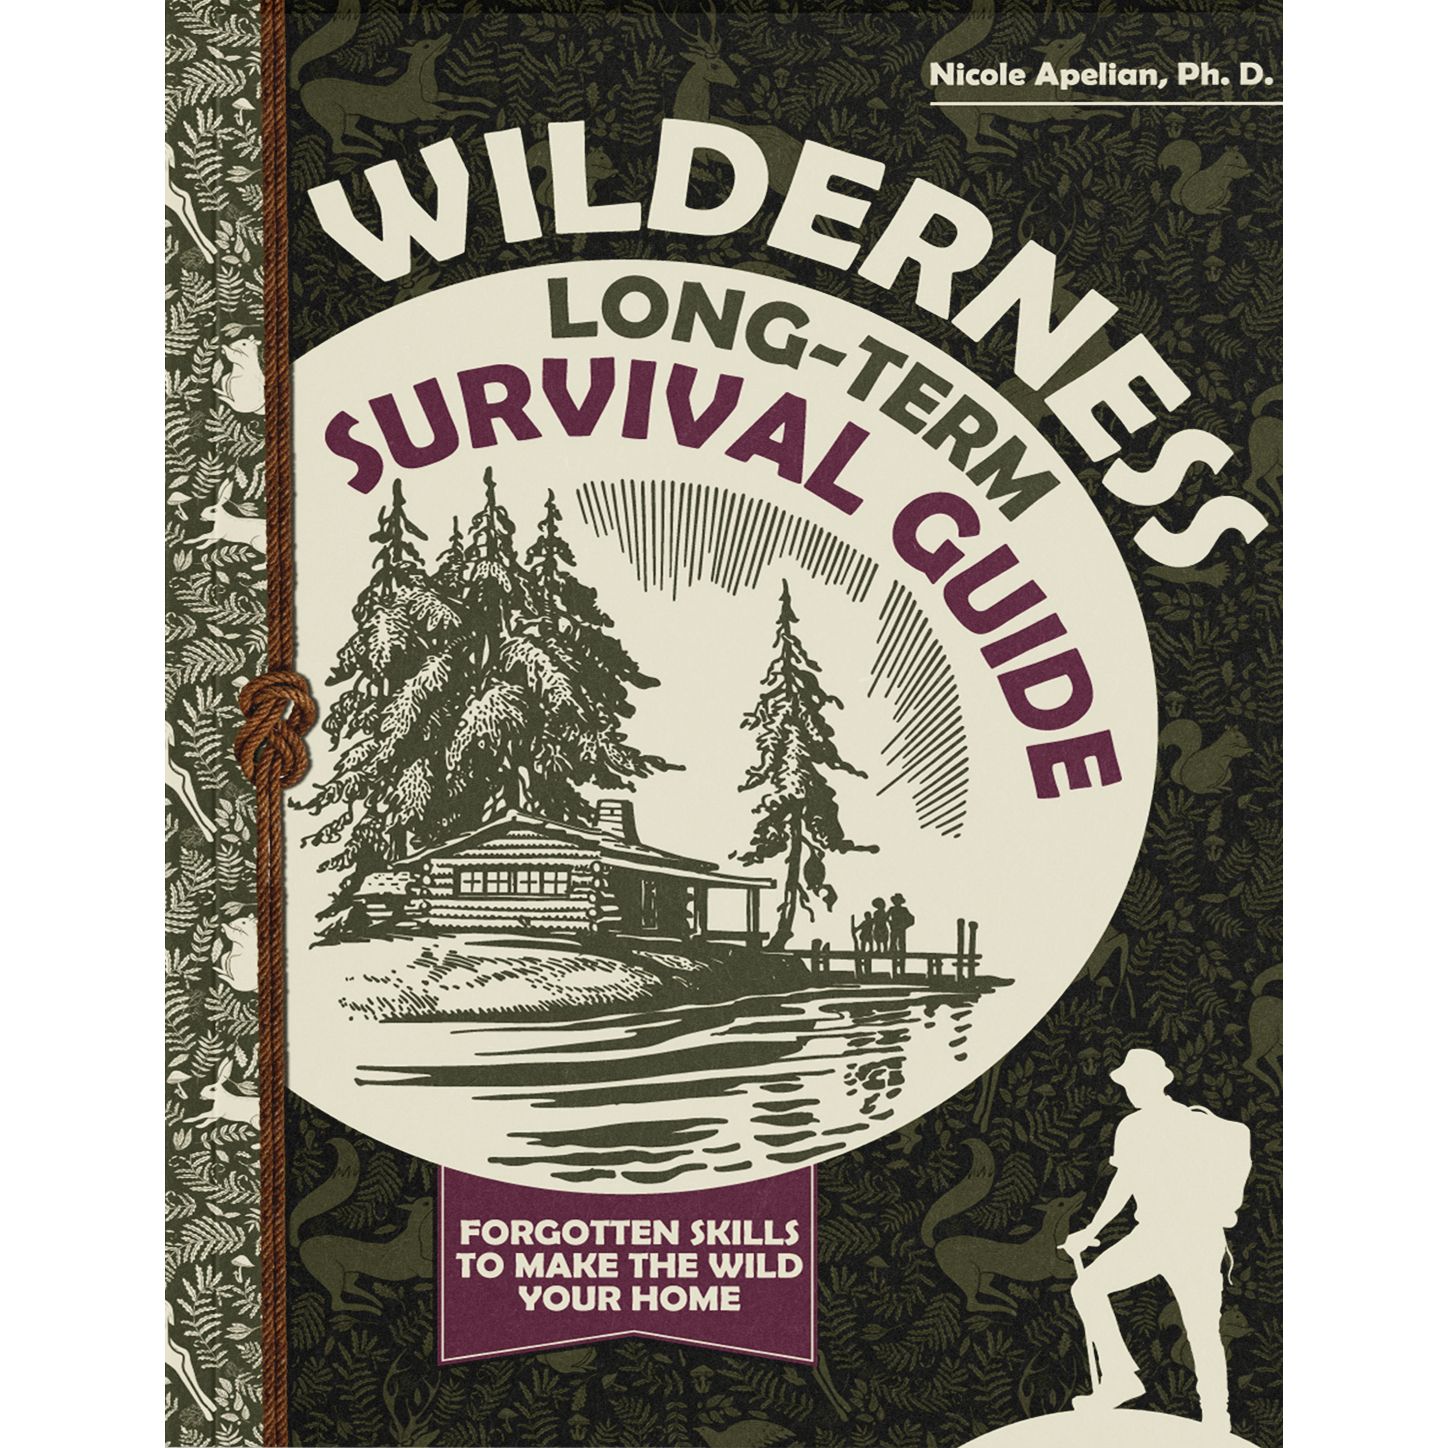 Nicole Apelian's "Wilderness Survival Guide"